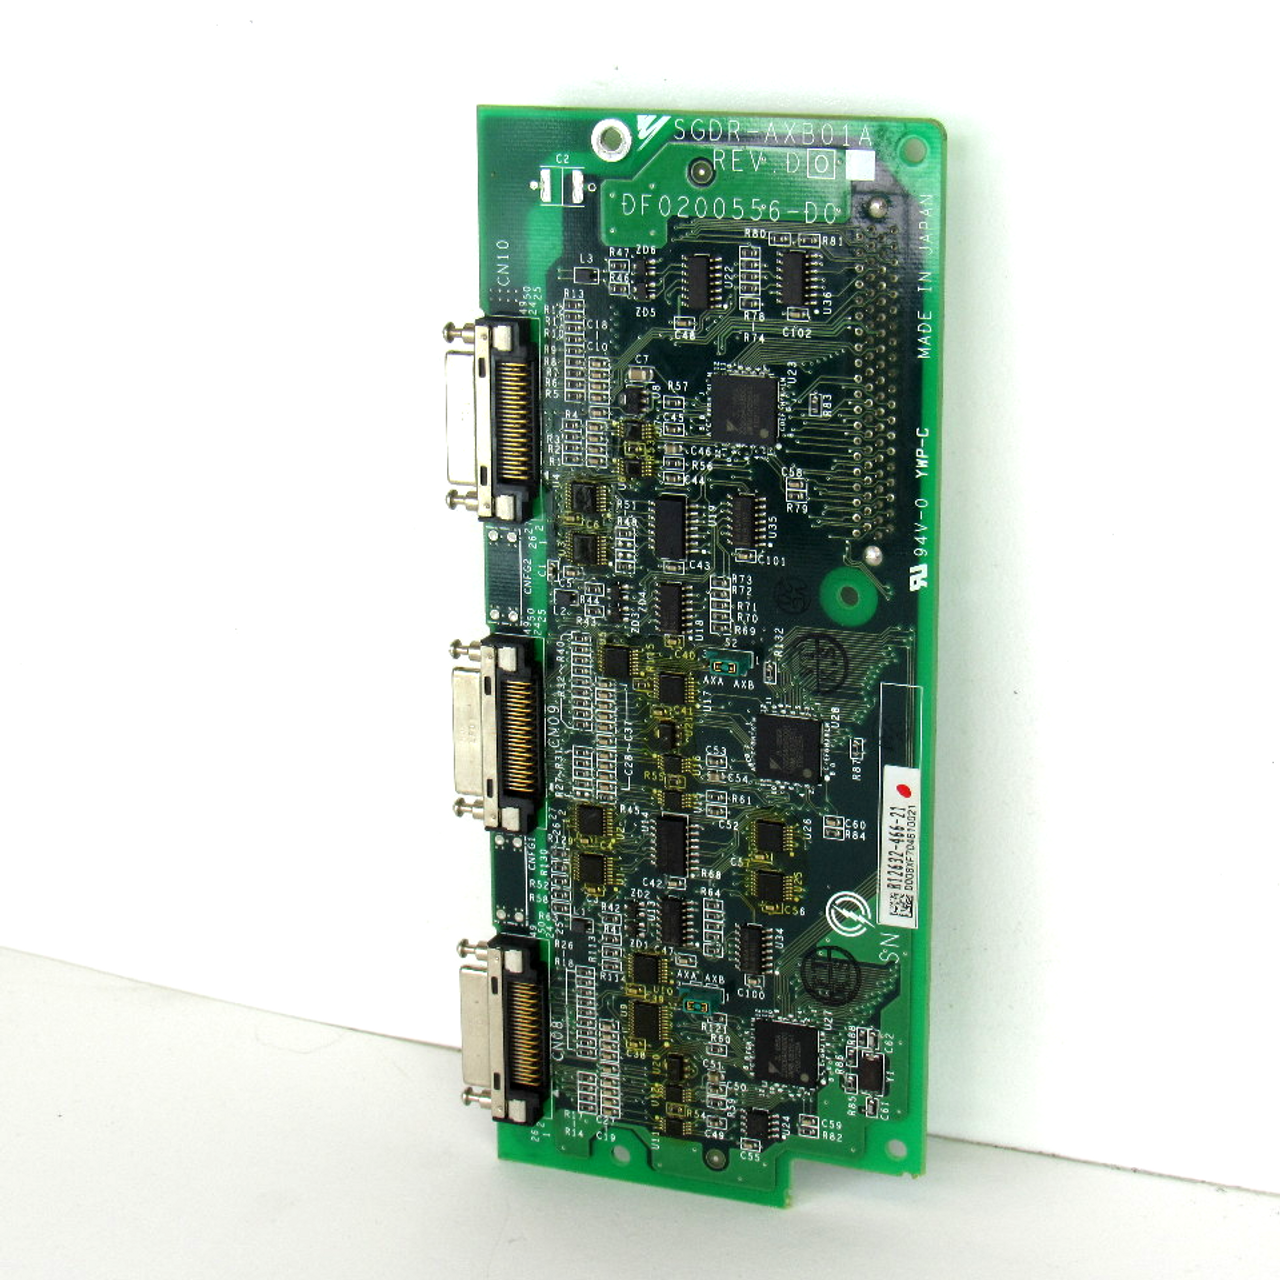 Yaskawa Electric SGDR-AXB01A Rev. D01 PC Axis Control Card, used